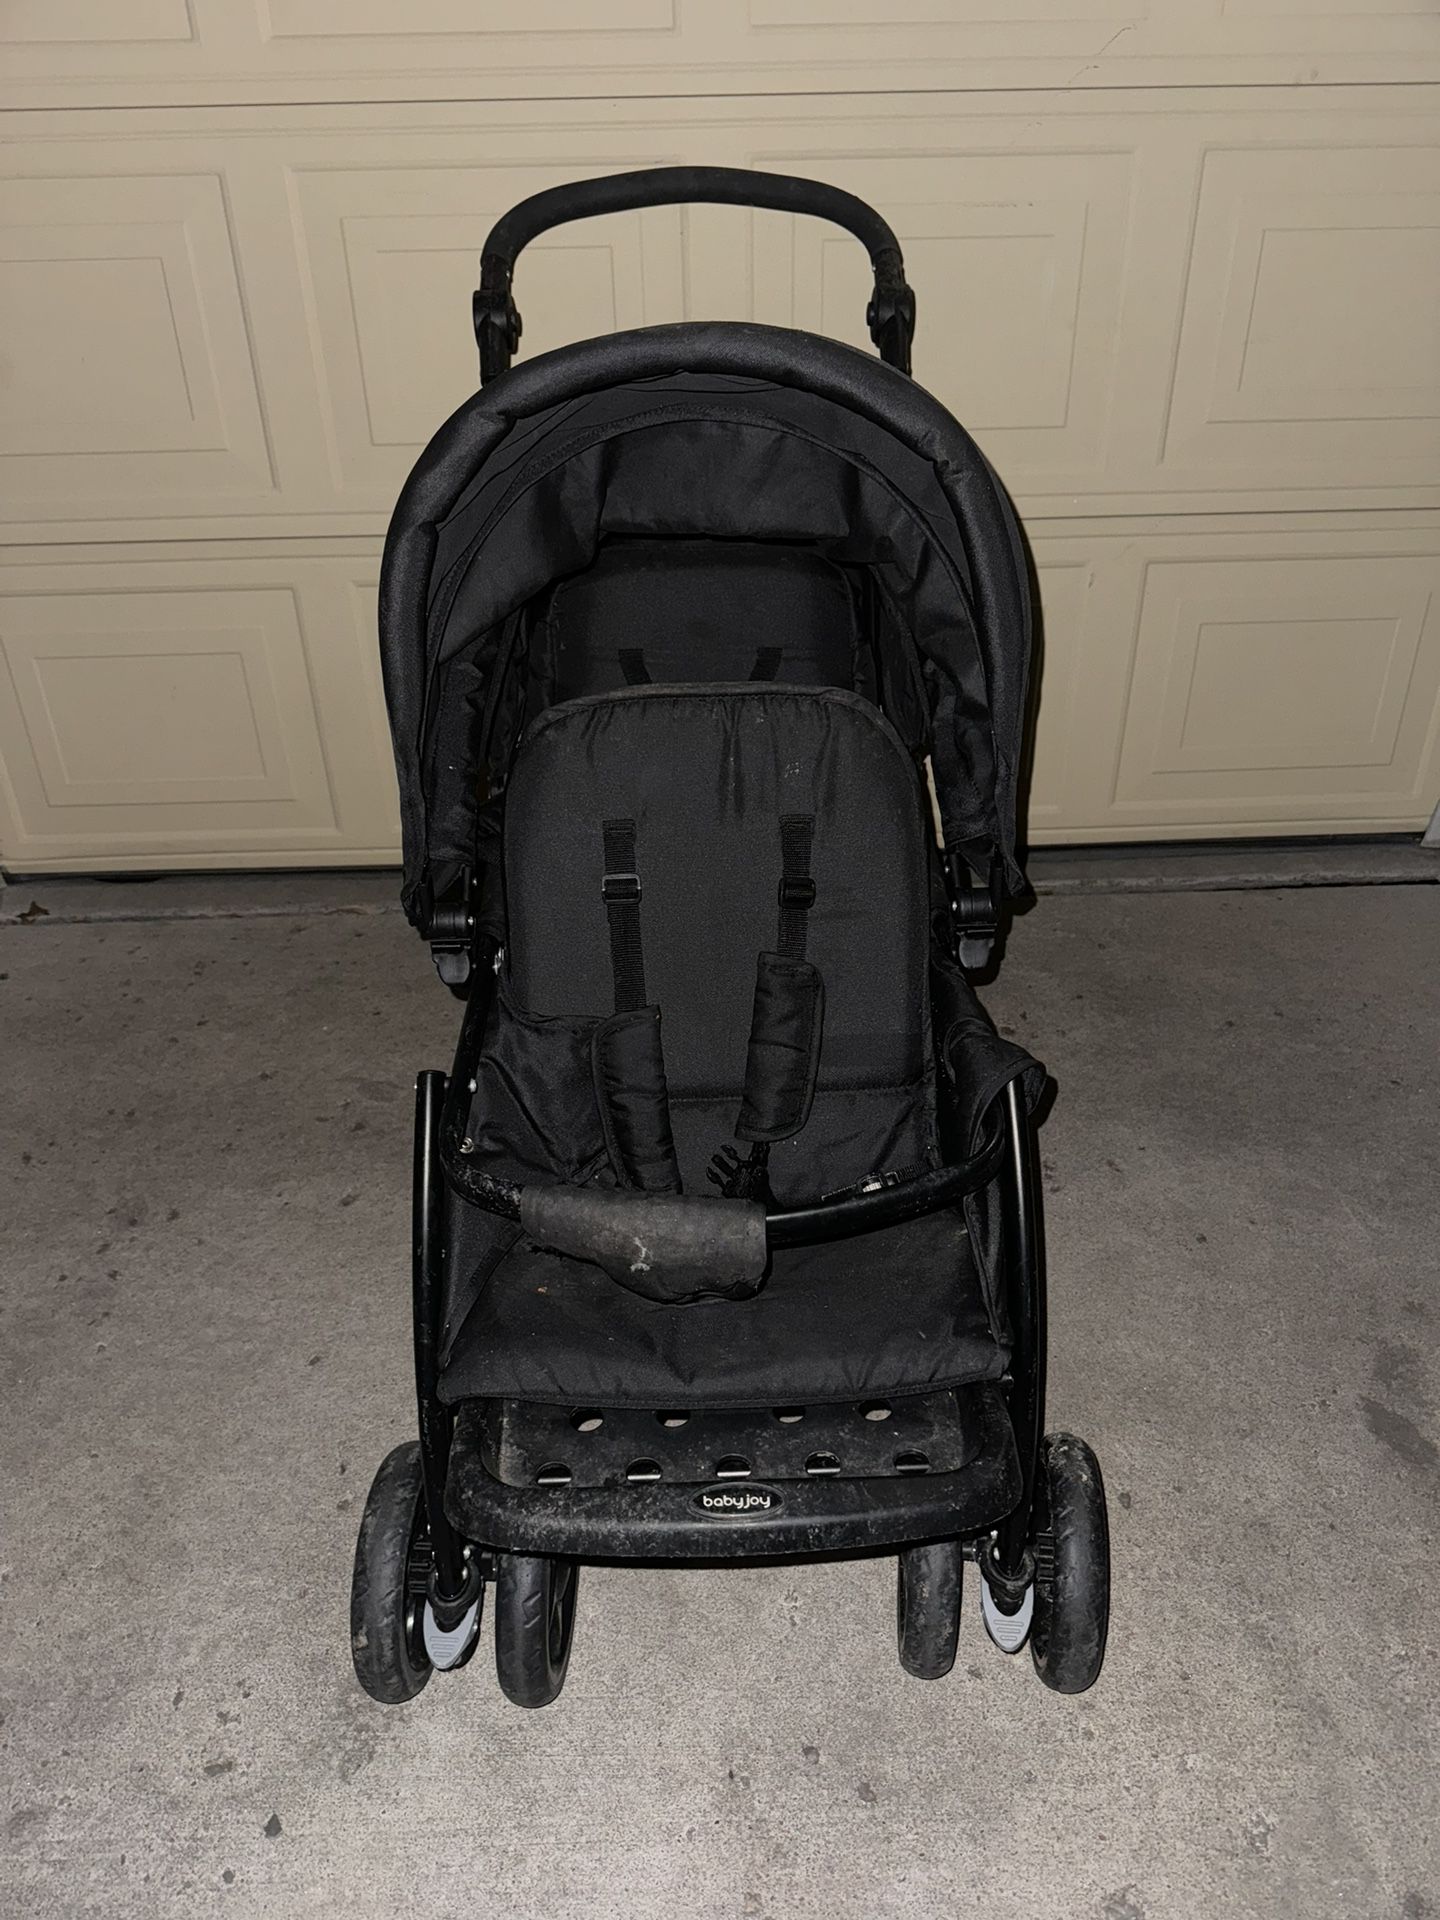 Babyjoy Double Stroller Foldable Baby Twin Lightweight Travel Stroller Infant Pushchair Black